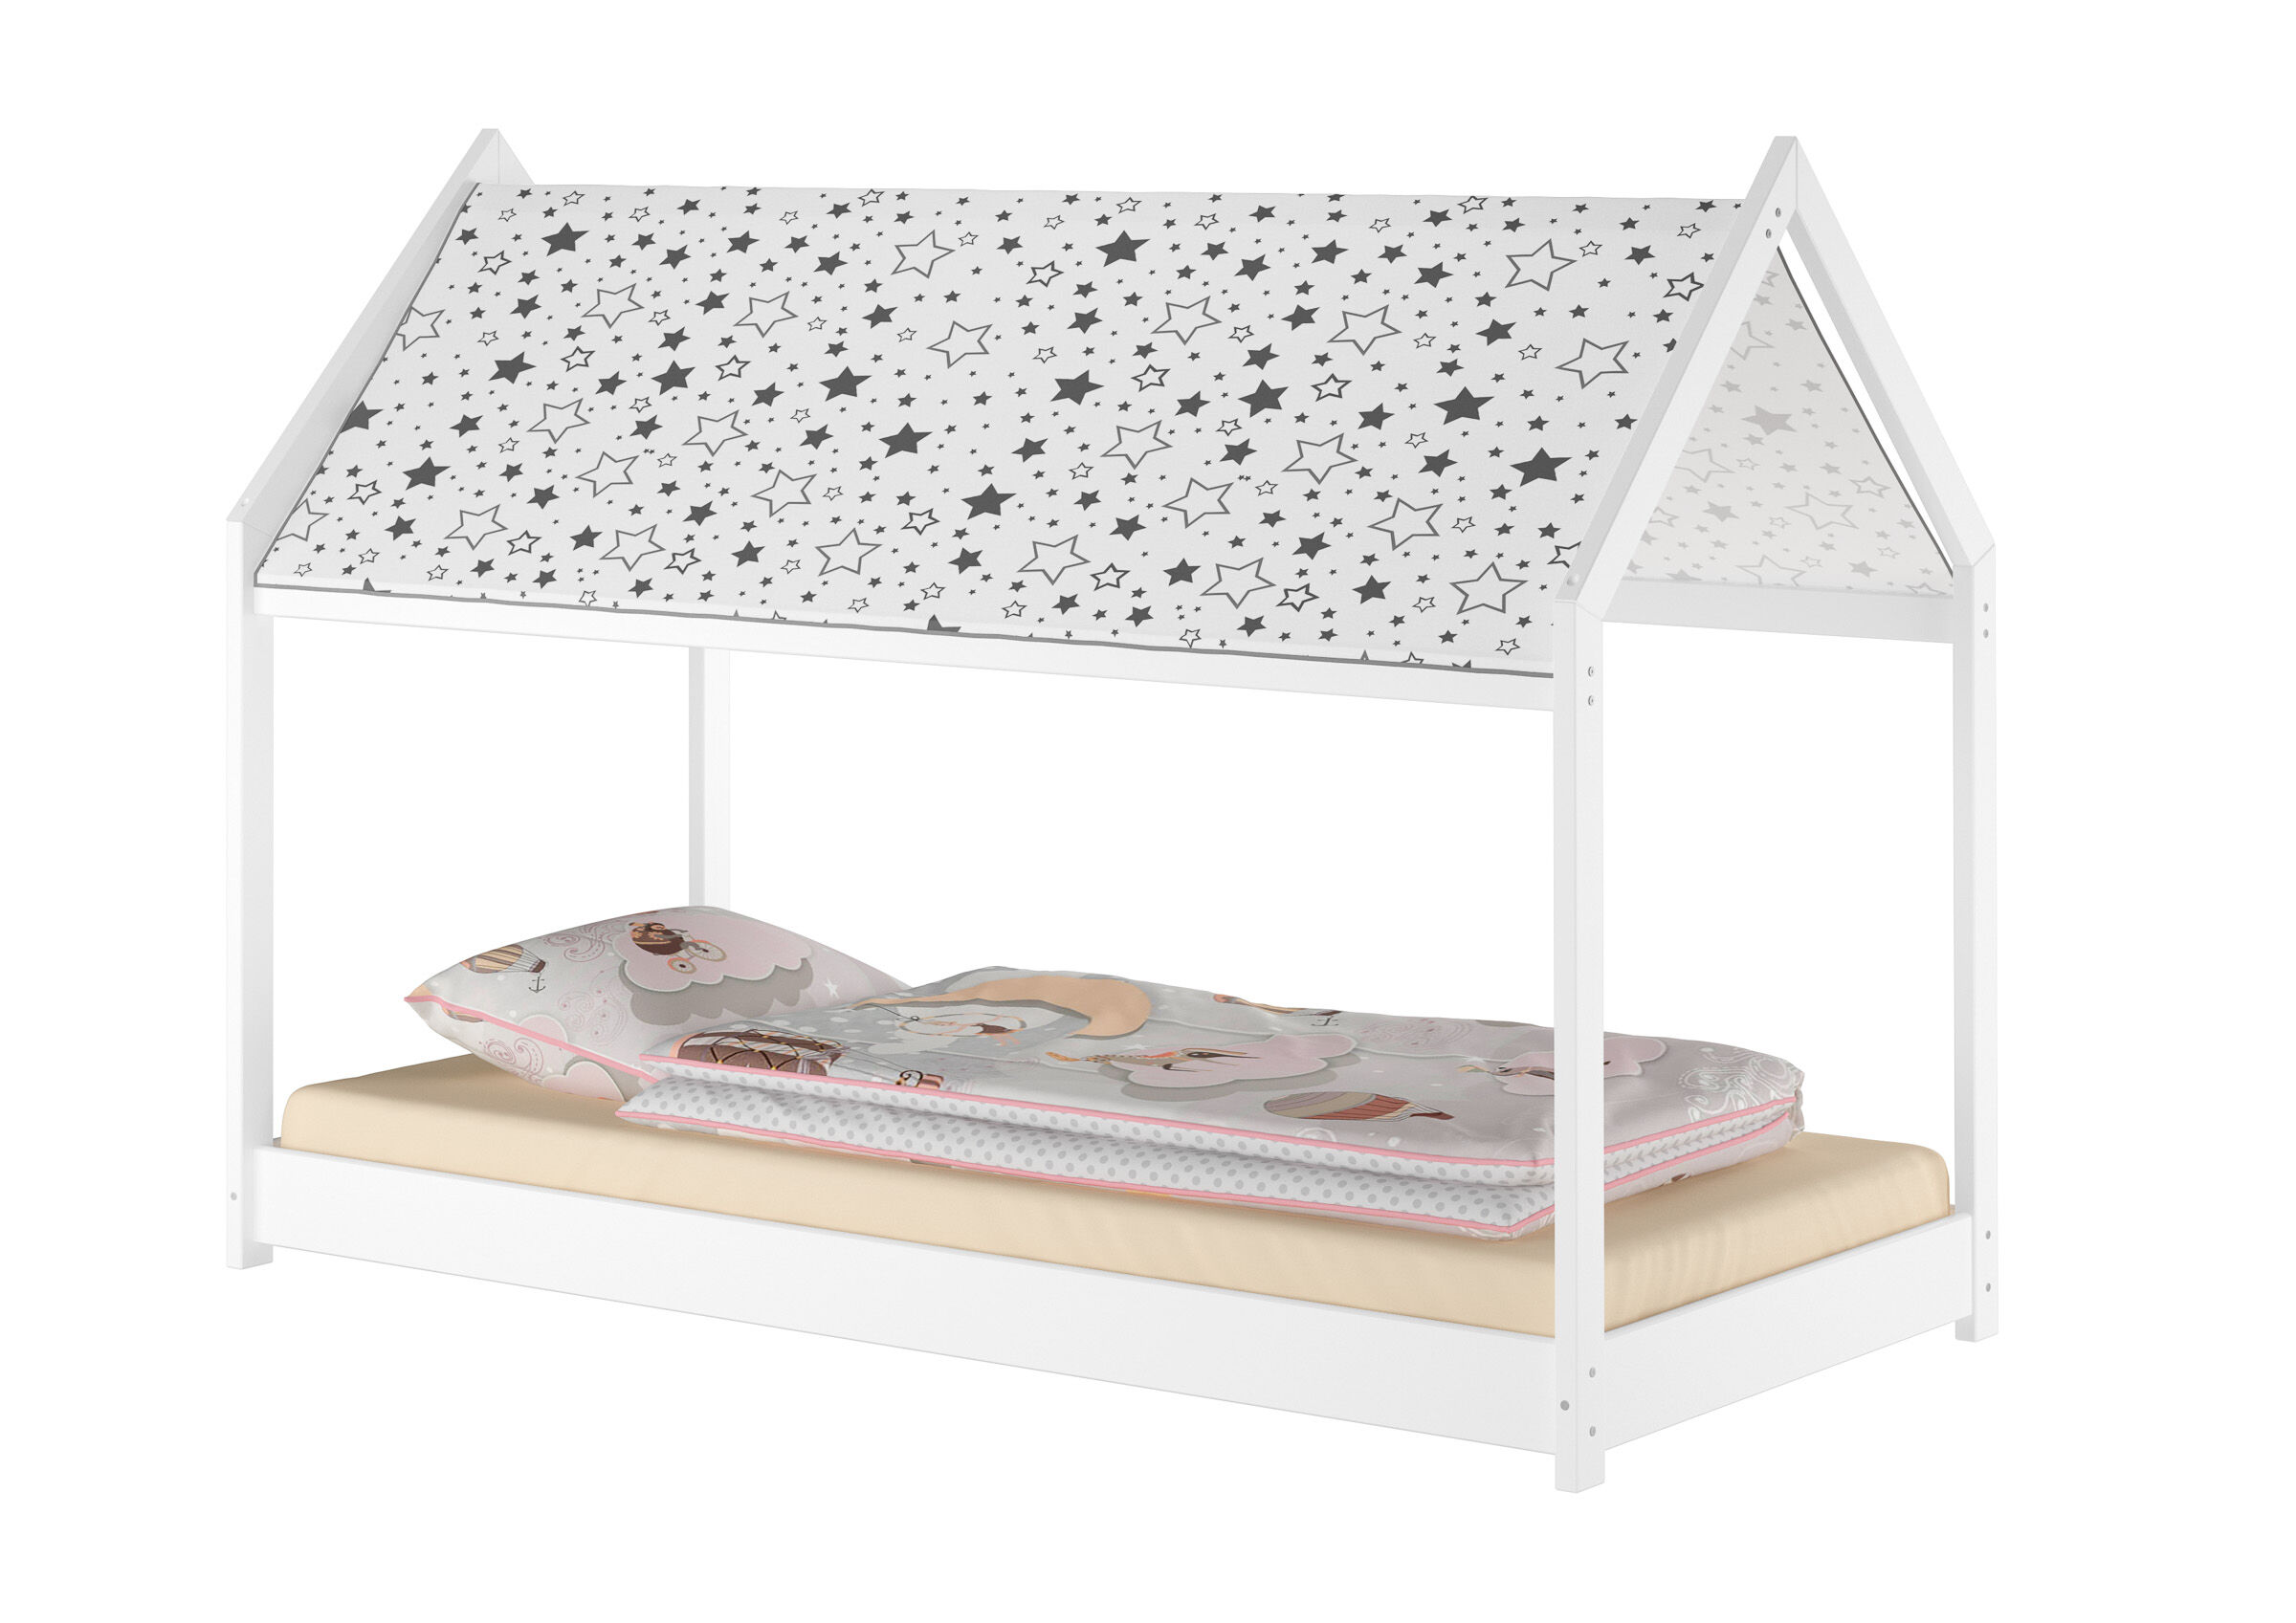 Kinderbett mit Dach in Sternenoptik